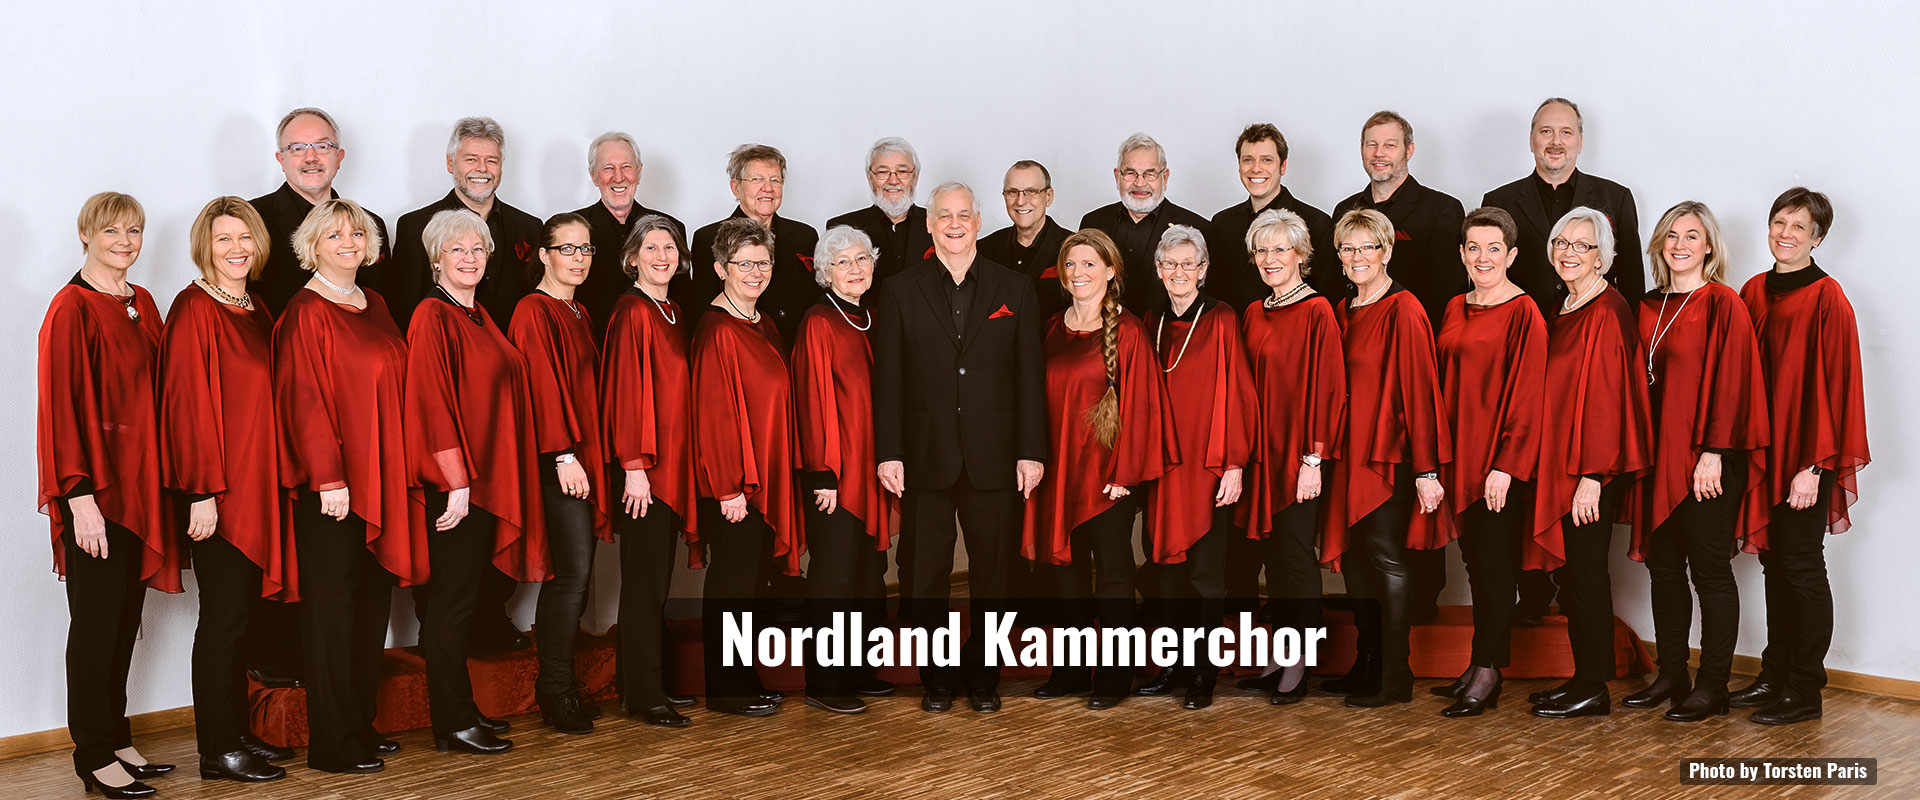 Nordland Kammerchor